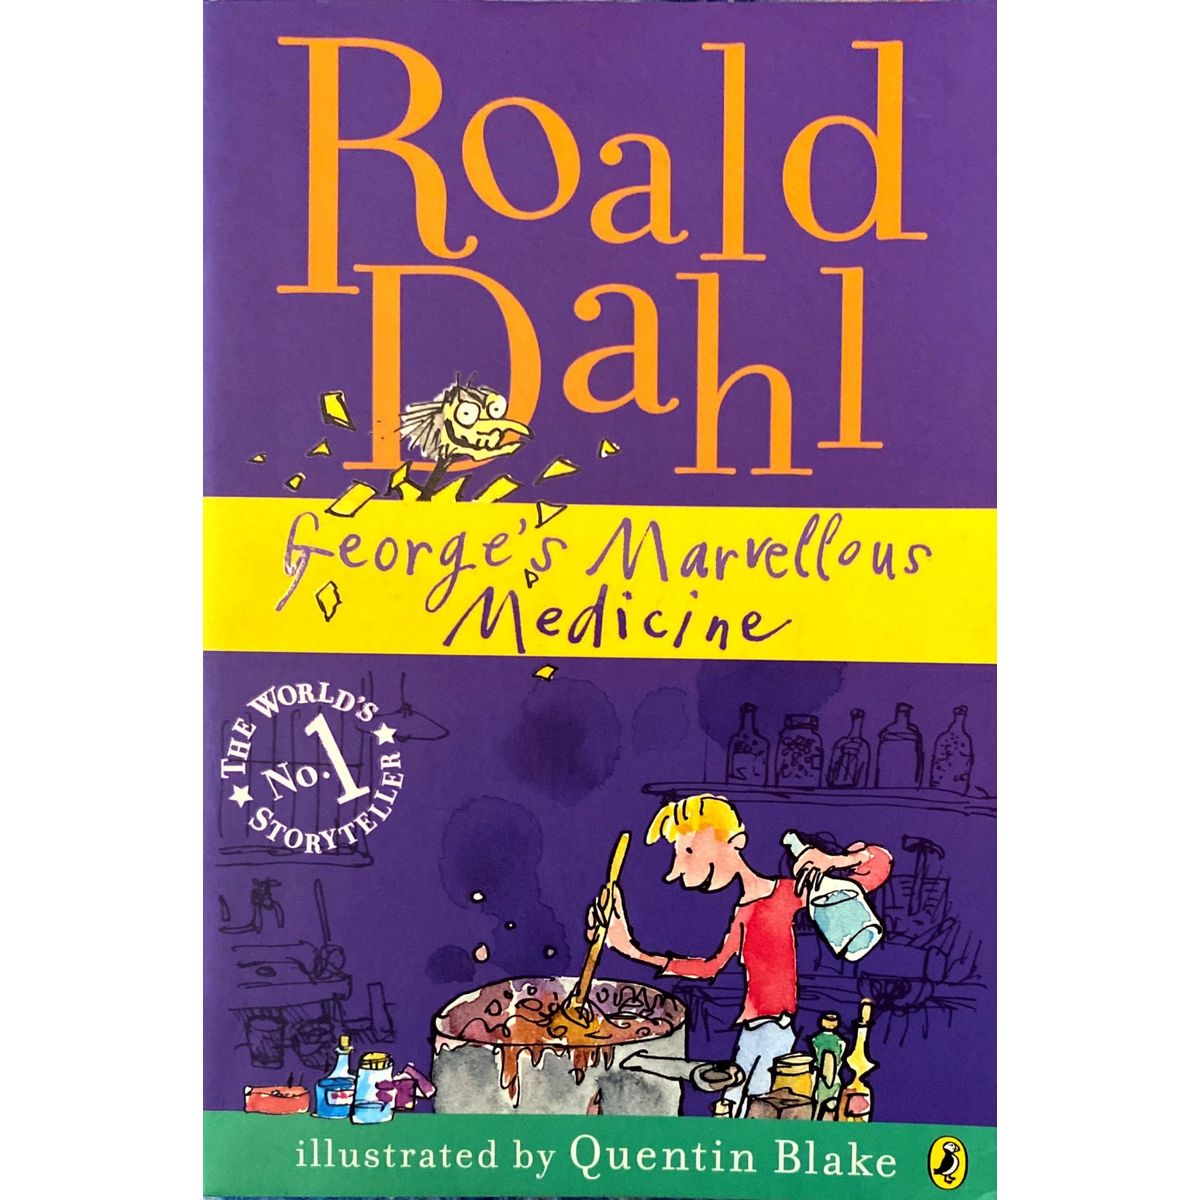 ISBN: 9780141326269 / 01413262635 - George's Marvellous Medicine by Roald Dahl [2007]